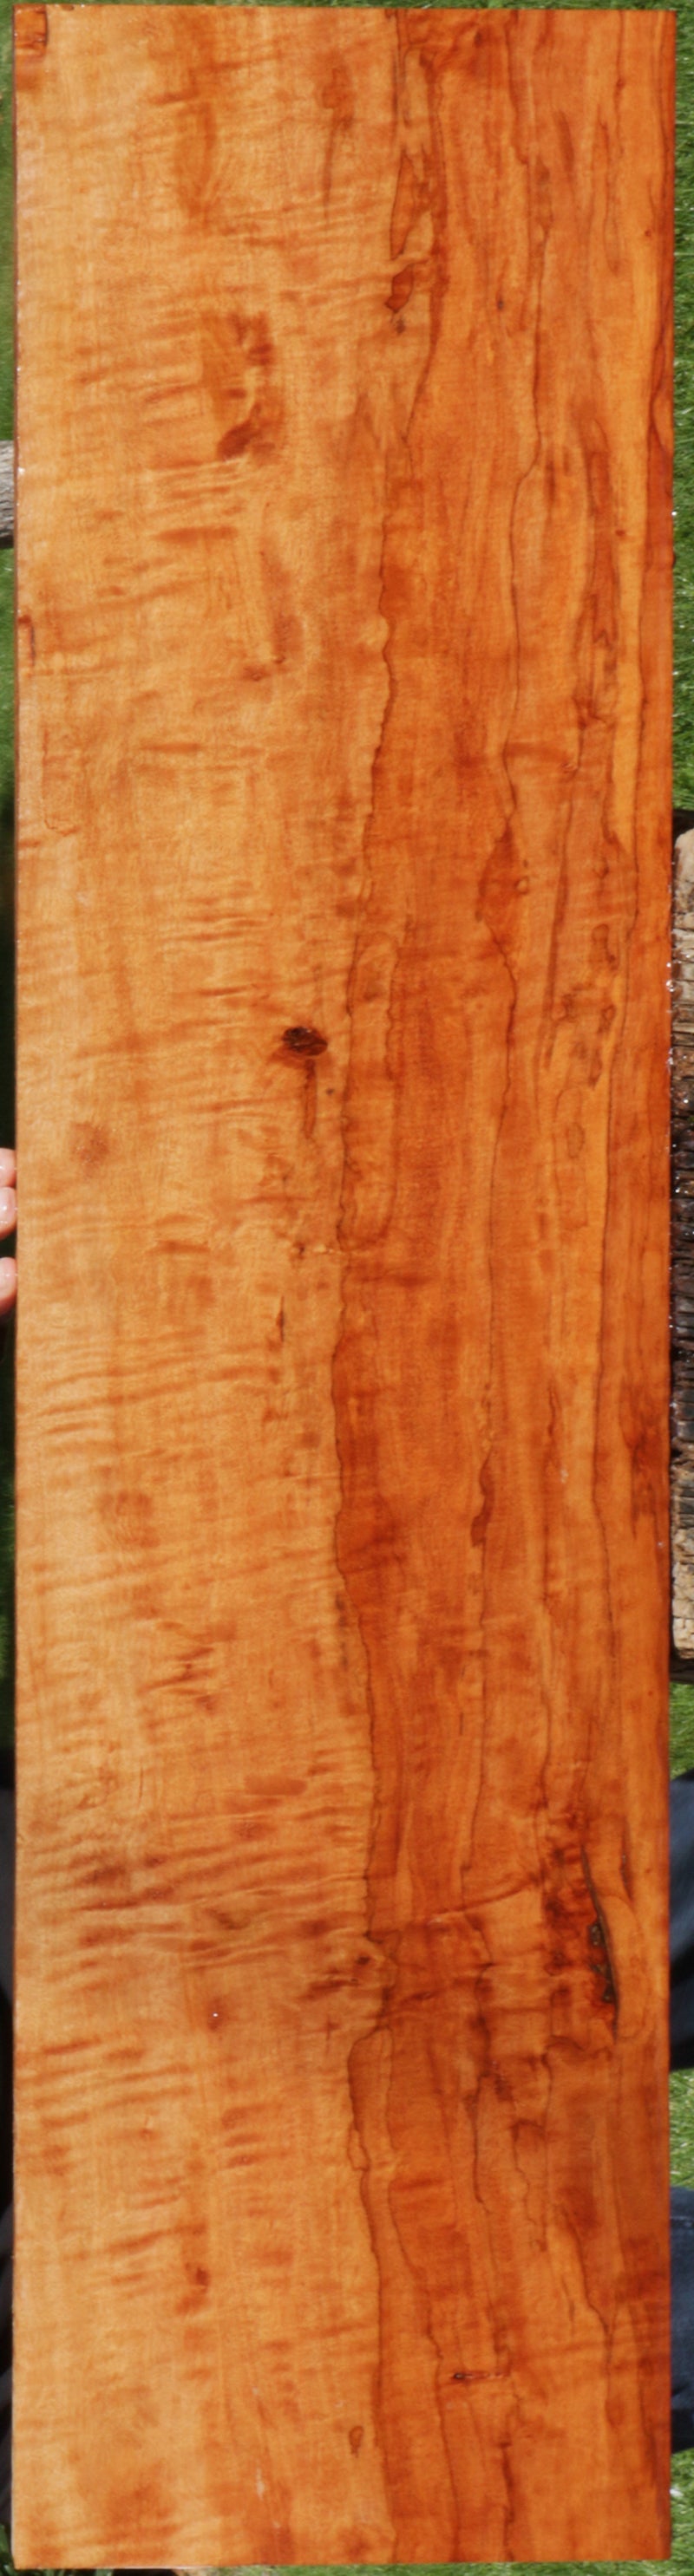 Spalted Exhibition Figured Rambutan Lumber